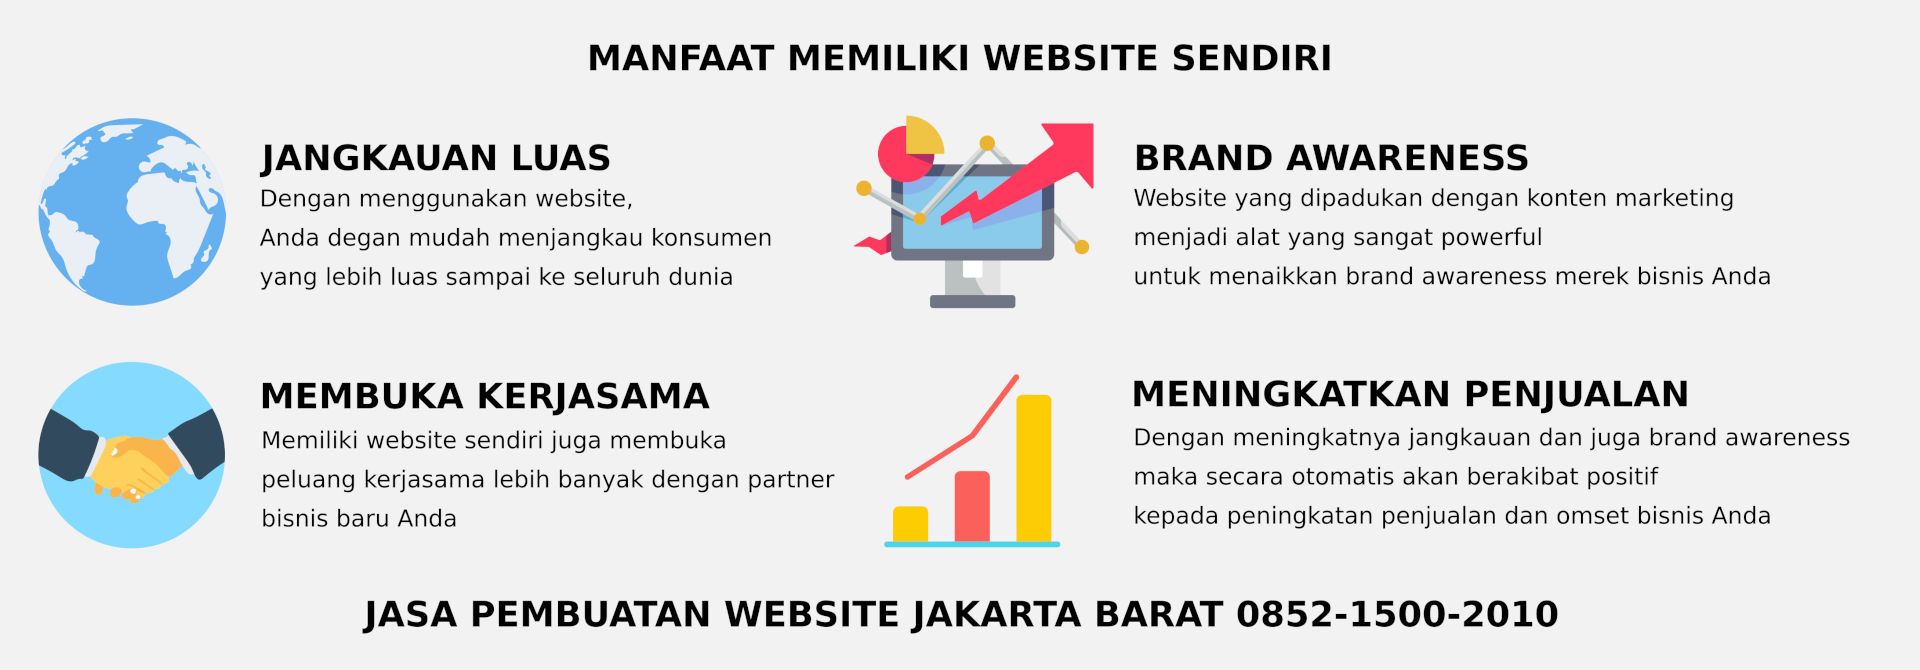 Manfaat memiliki website sendiri di Jakarta Barat